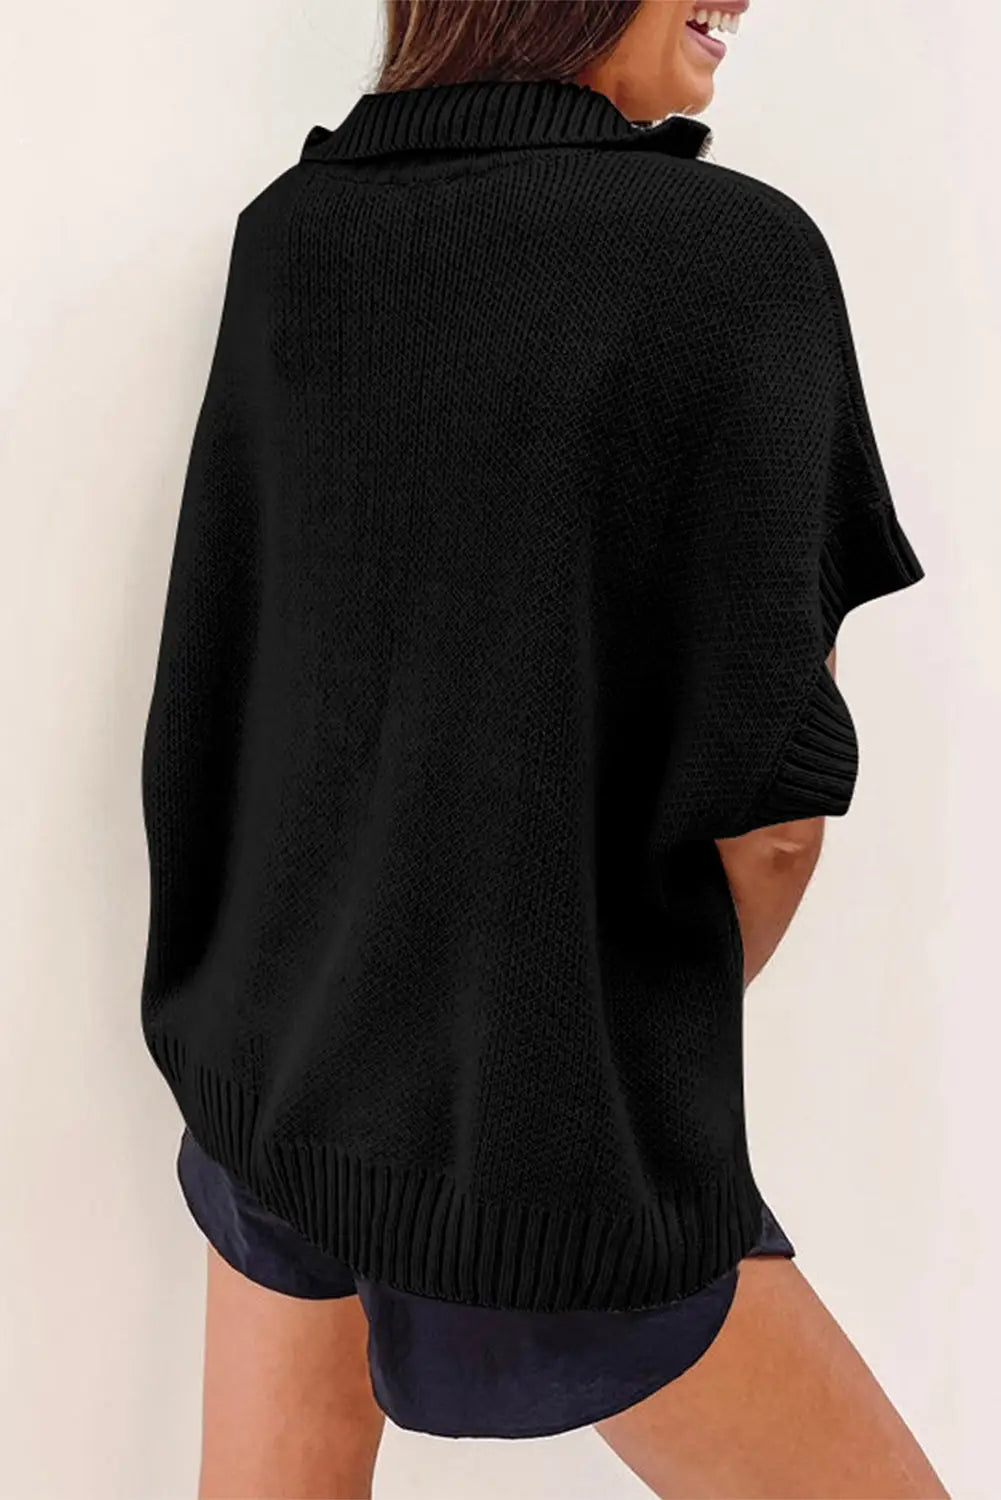 Black quarter zip short batwing sleeve sweater - sweaters & cardigans